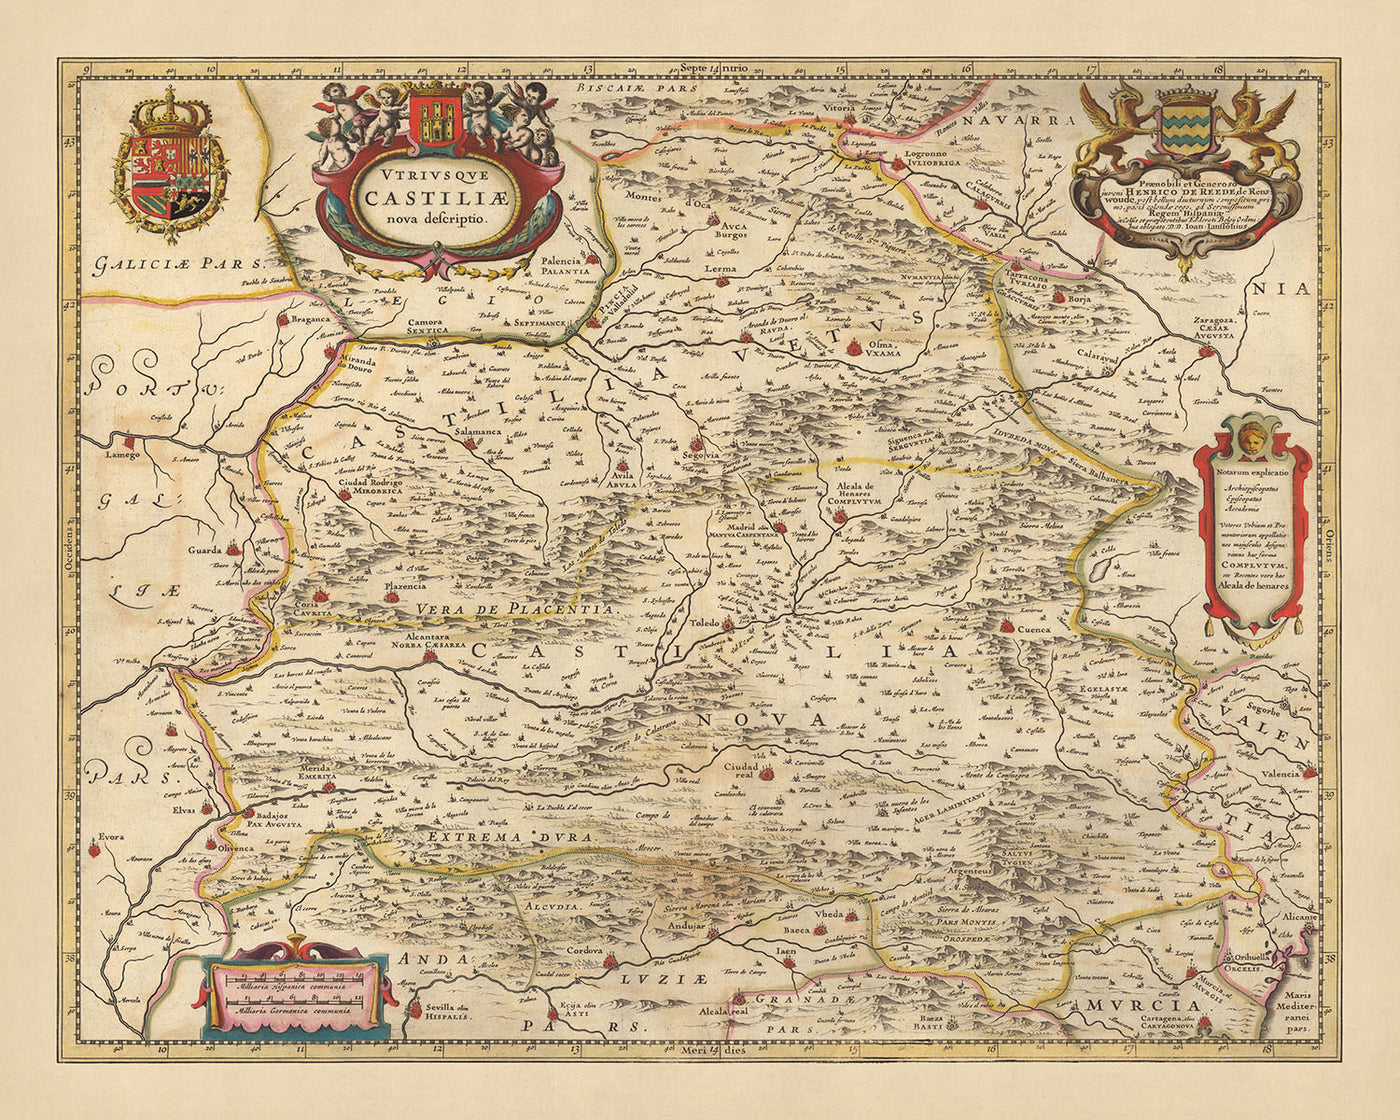 Old Map of Old & New Castile, Spain by Visscher, 1690: Madrid, Valencia, Seville, Zaragoza, Murcia